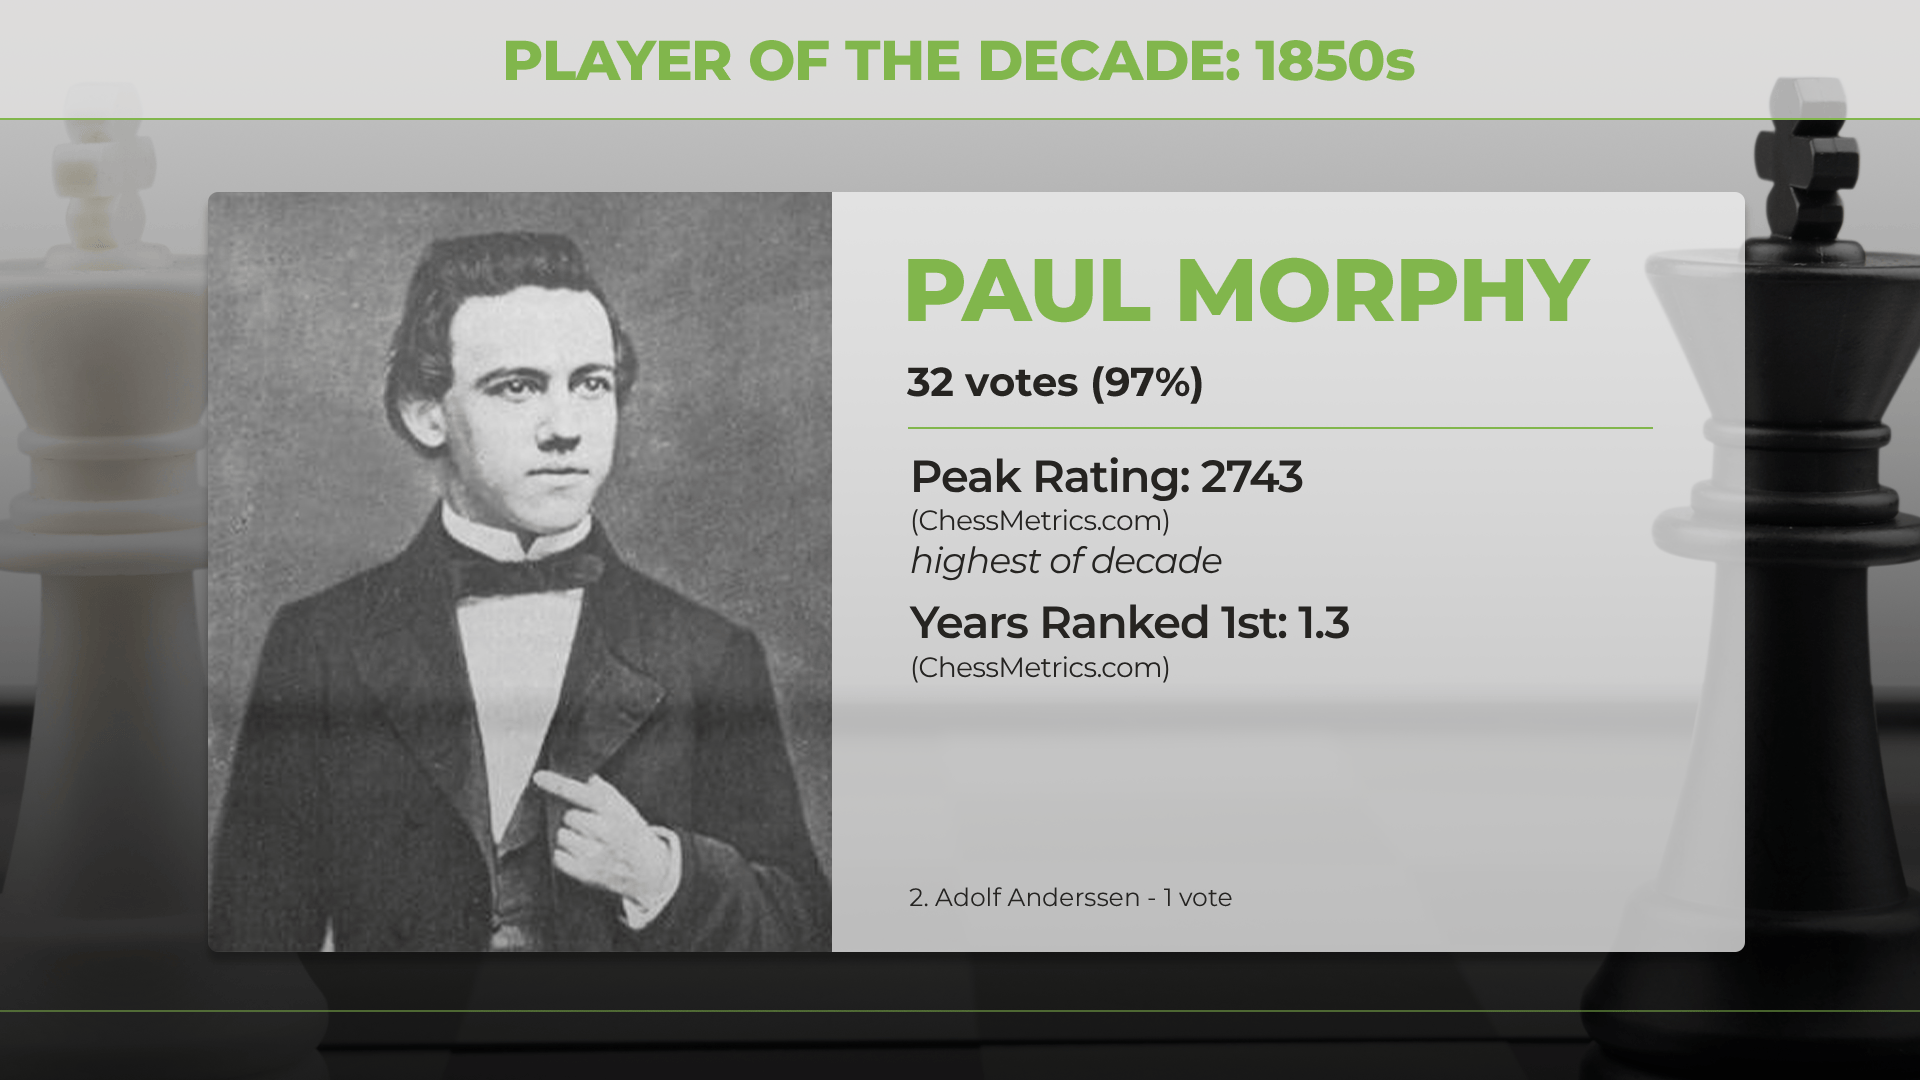 Paul Morphy: the denouement - Morphy retires